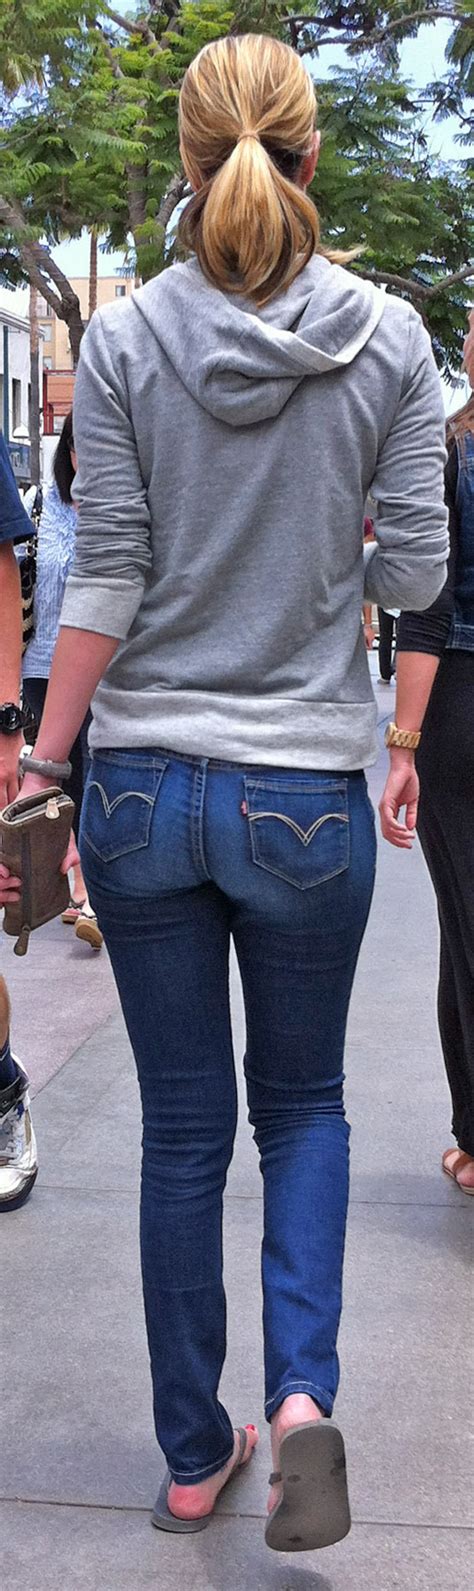 Peepforum Com Threads Bubble Butt On Skinny Blonde In Tight Jeans